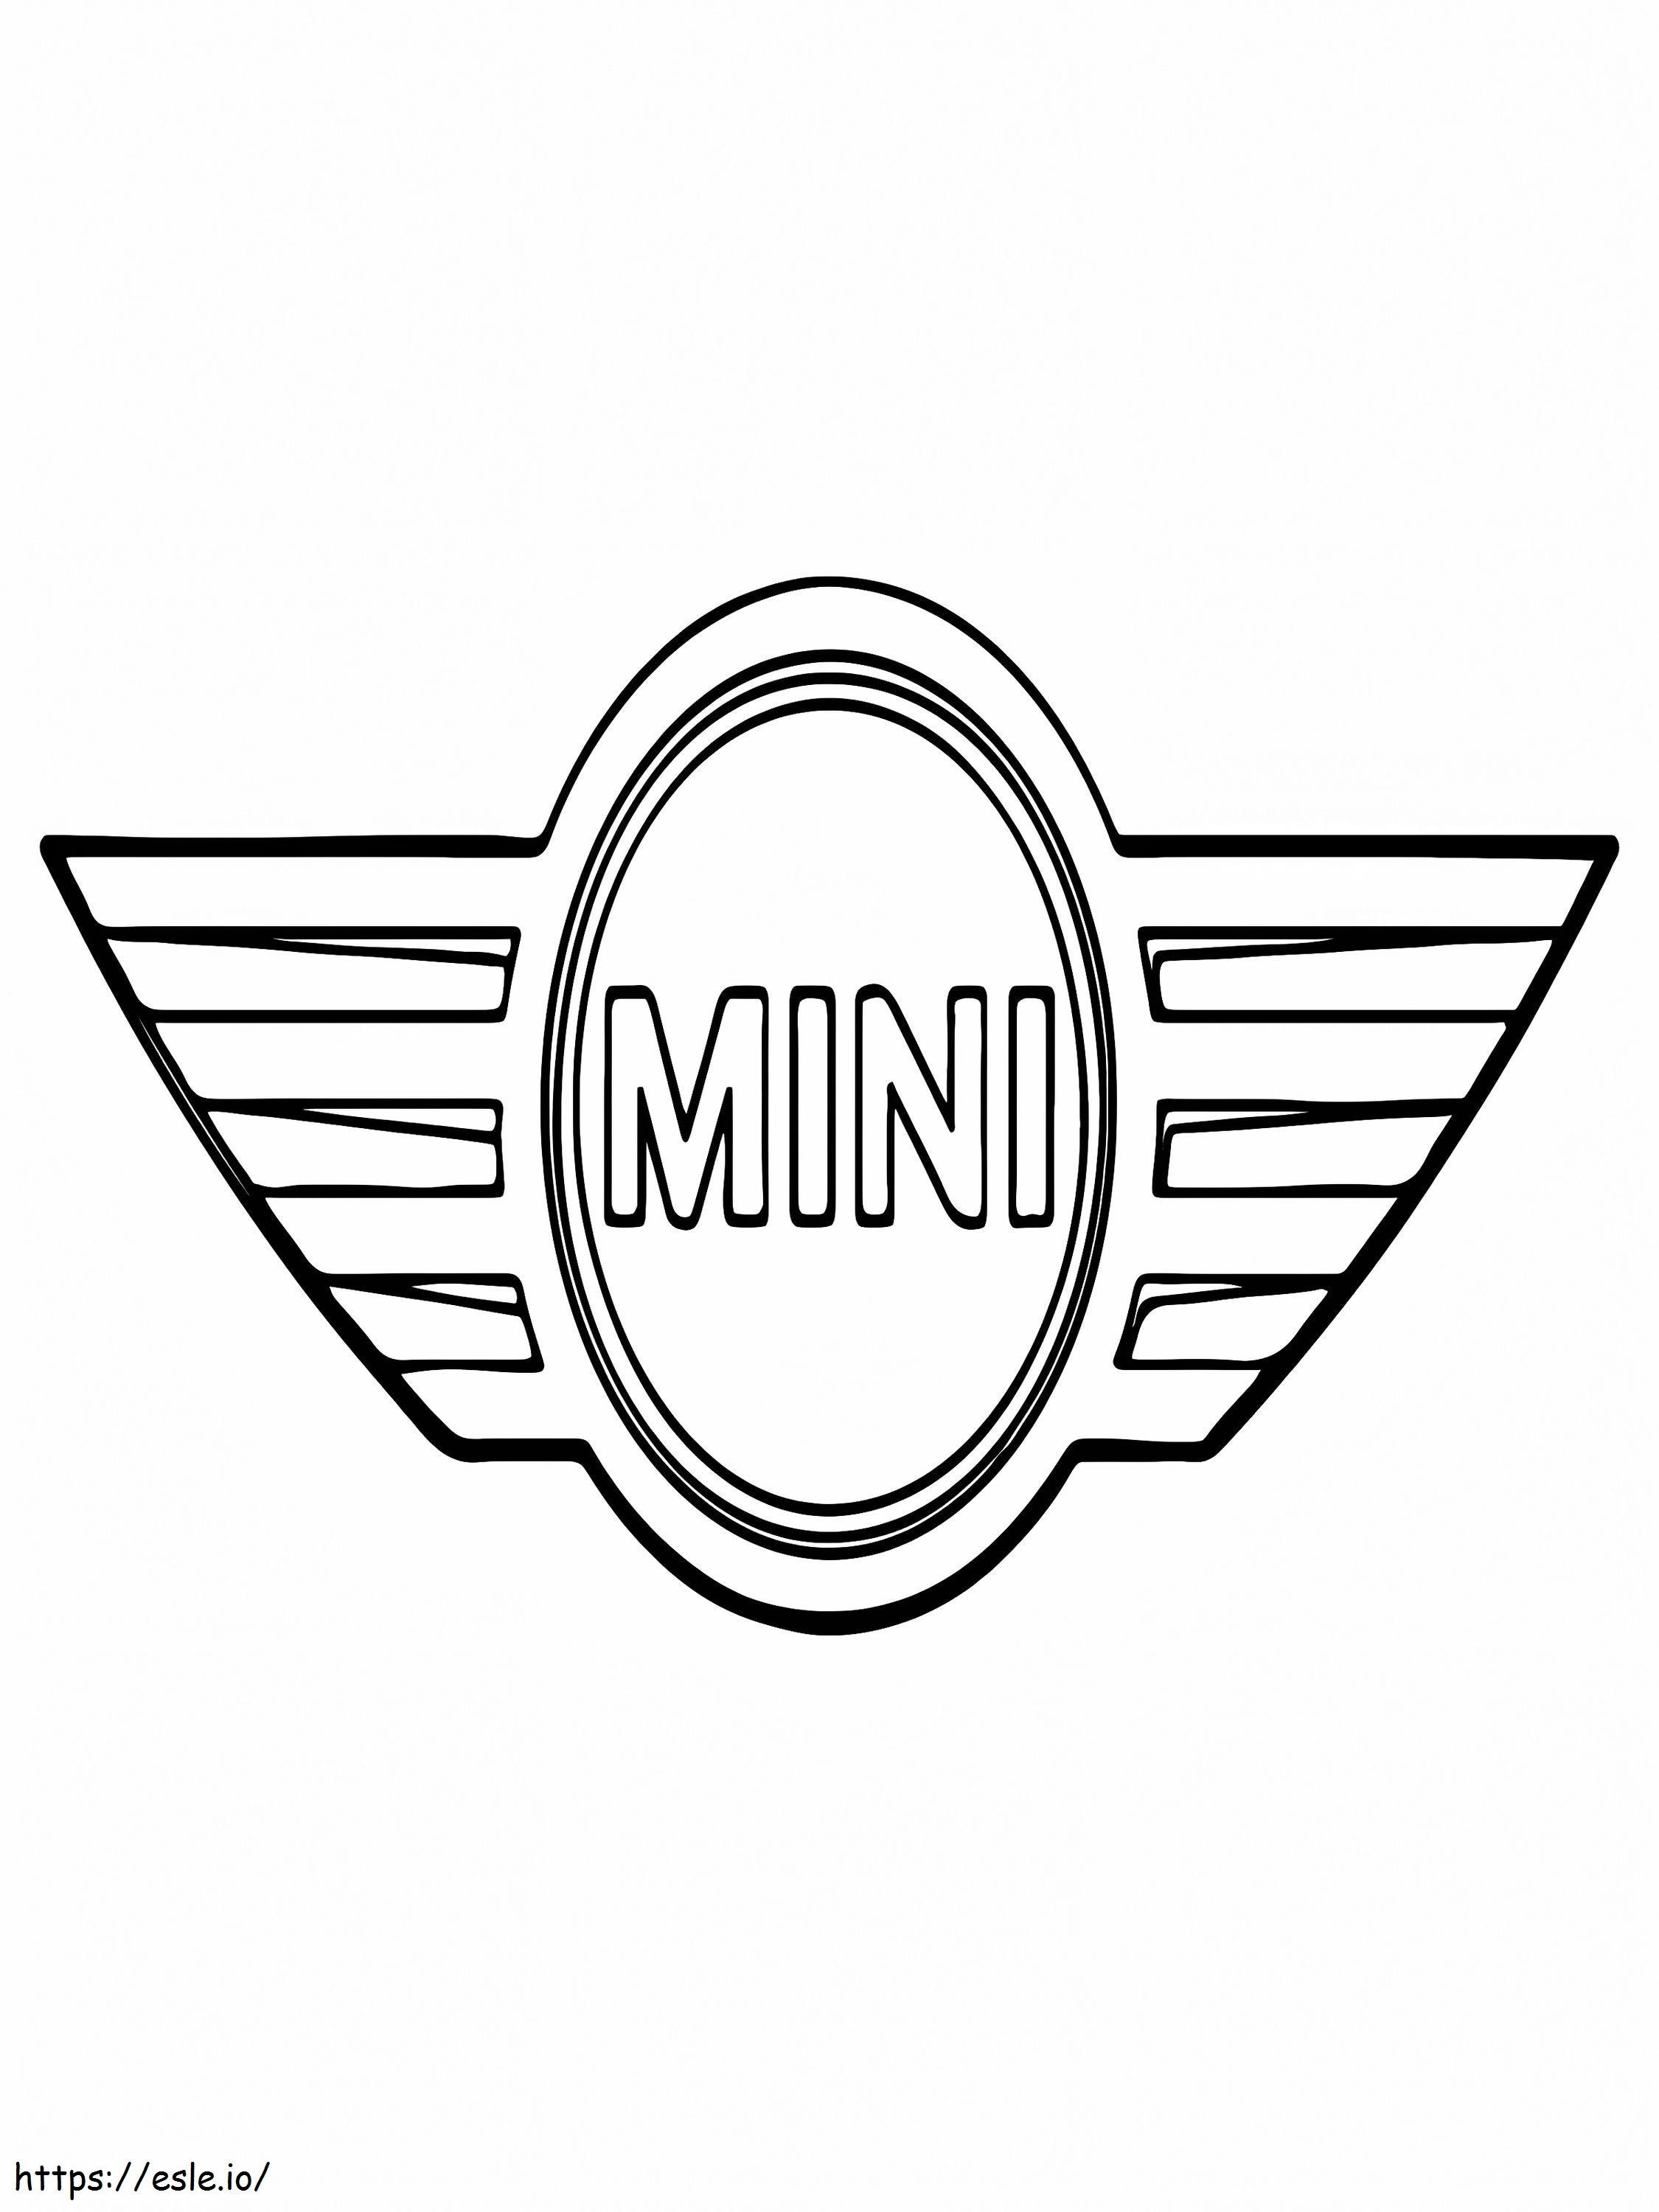 Mini-auto-logo kleurplaat kleurplaat